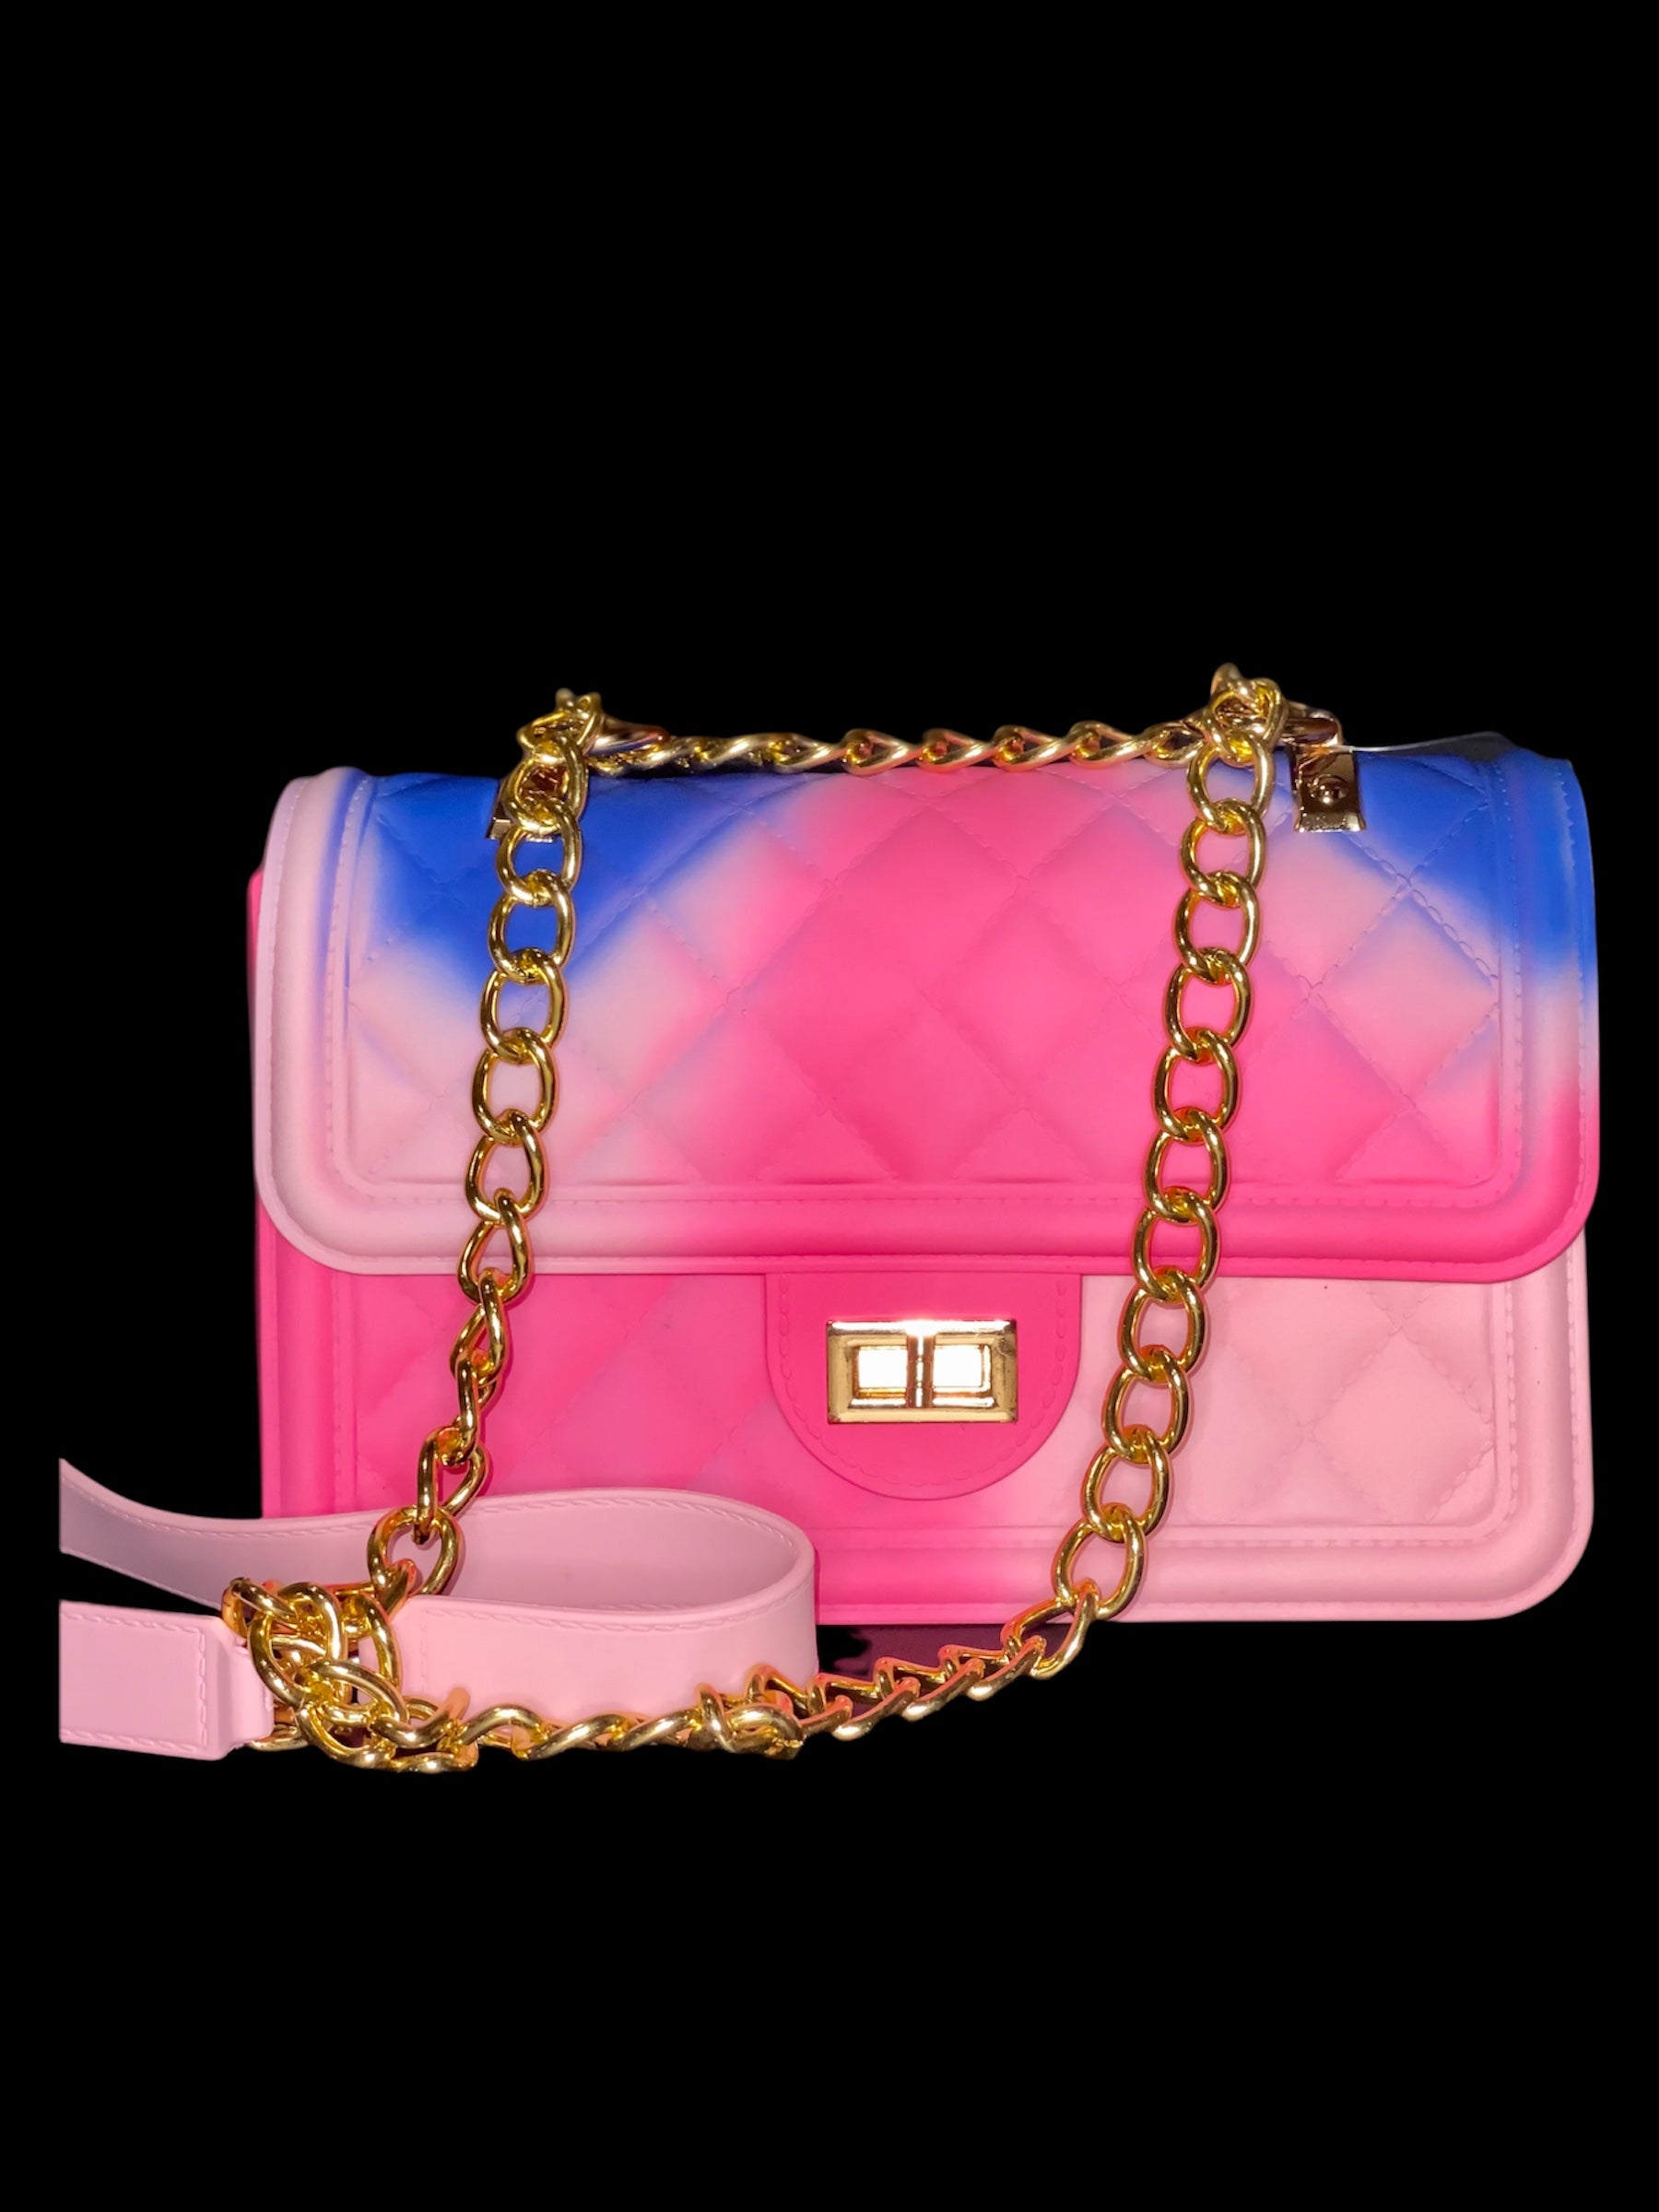 Alexia Echevarria's Rainbow Chanel Bag